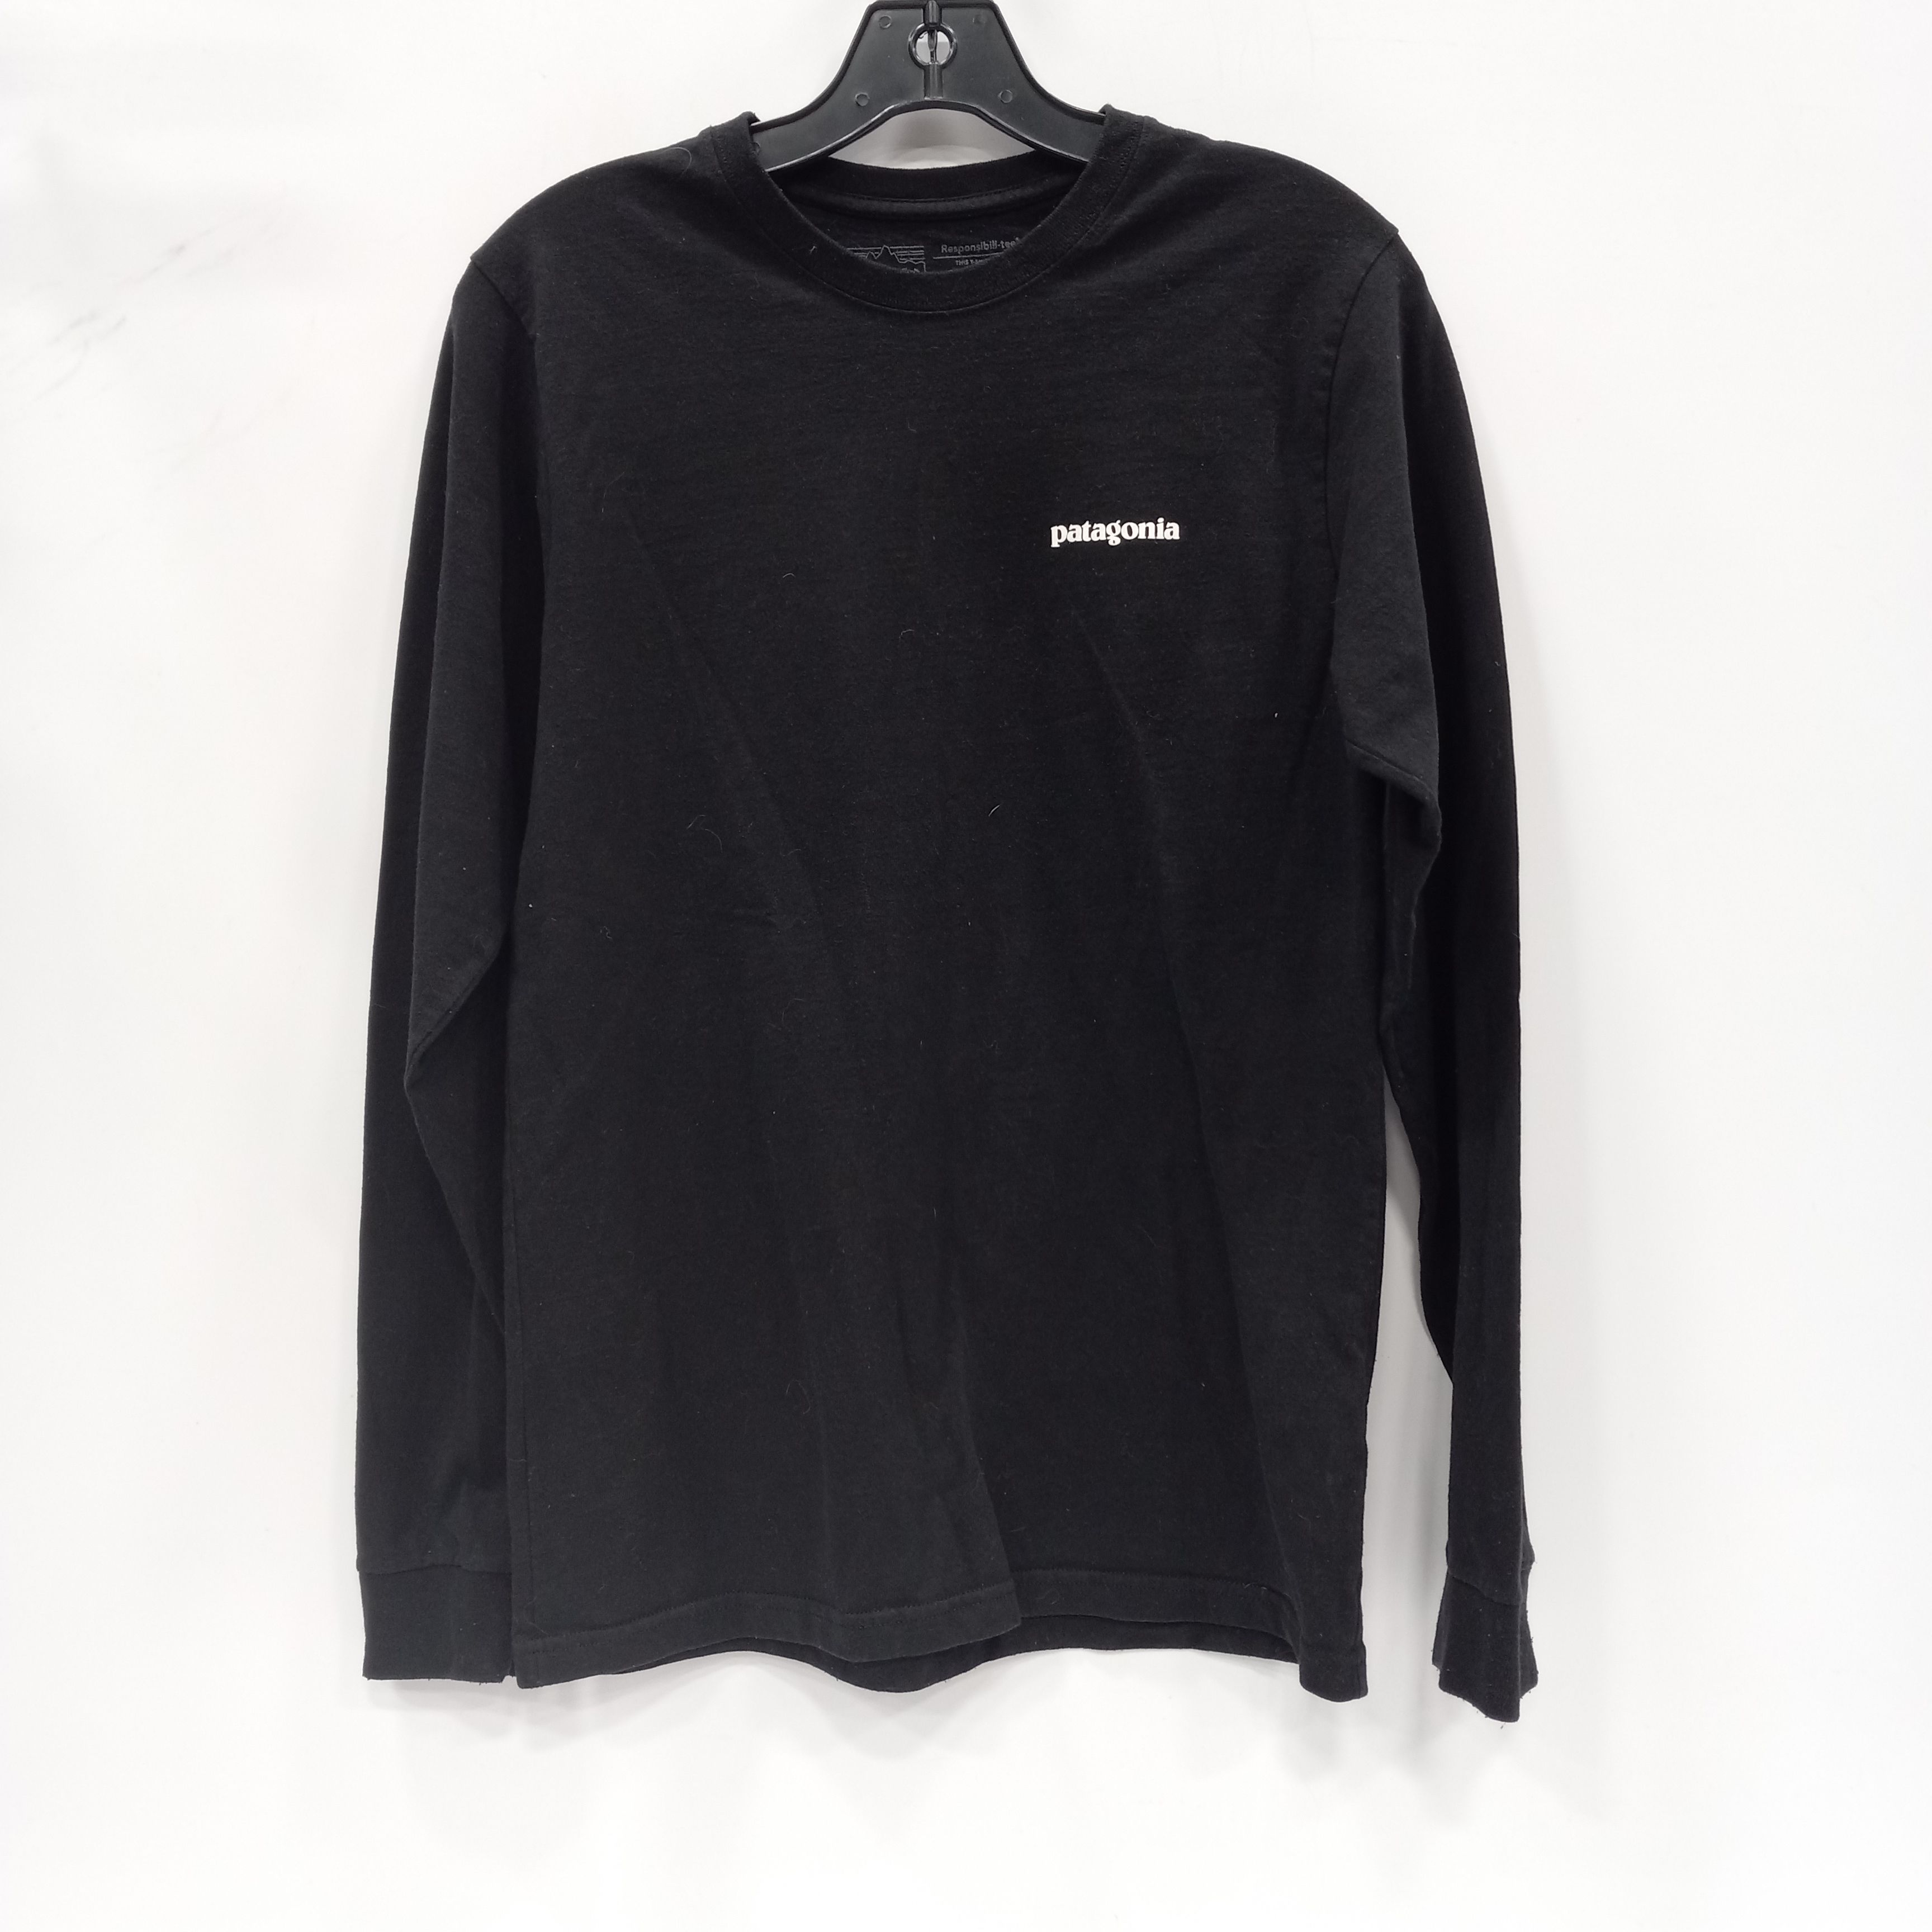 Buy the Patagonia Men's Black Regular Fit Long Sleeve Shirt Size S